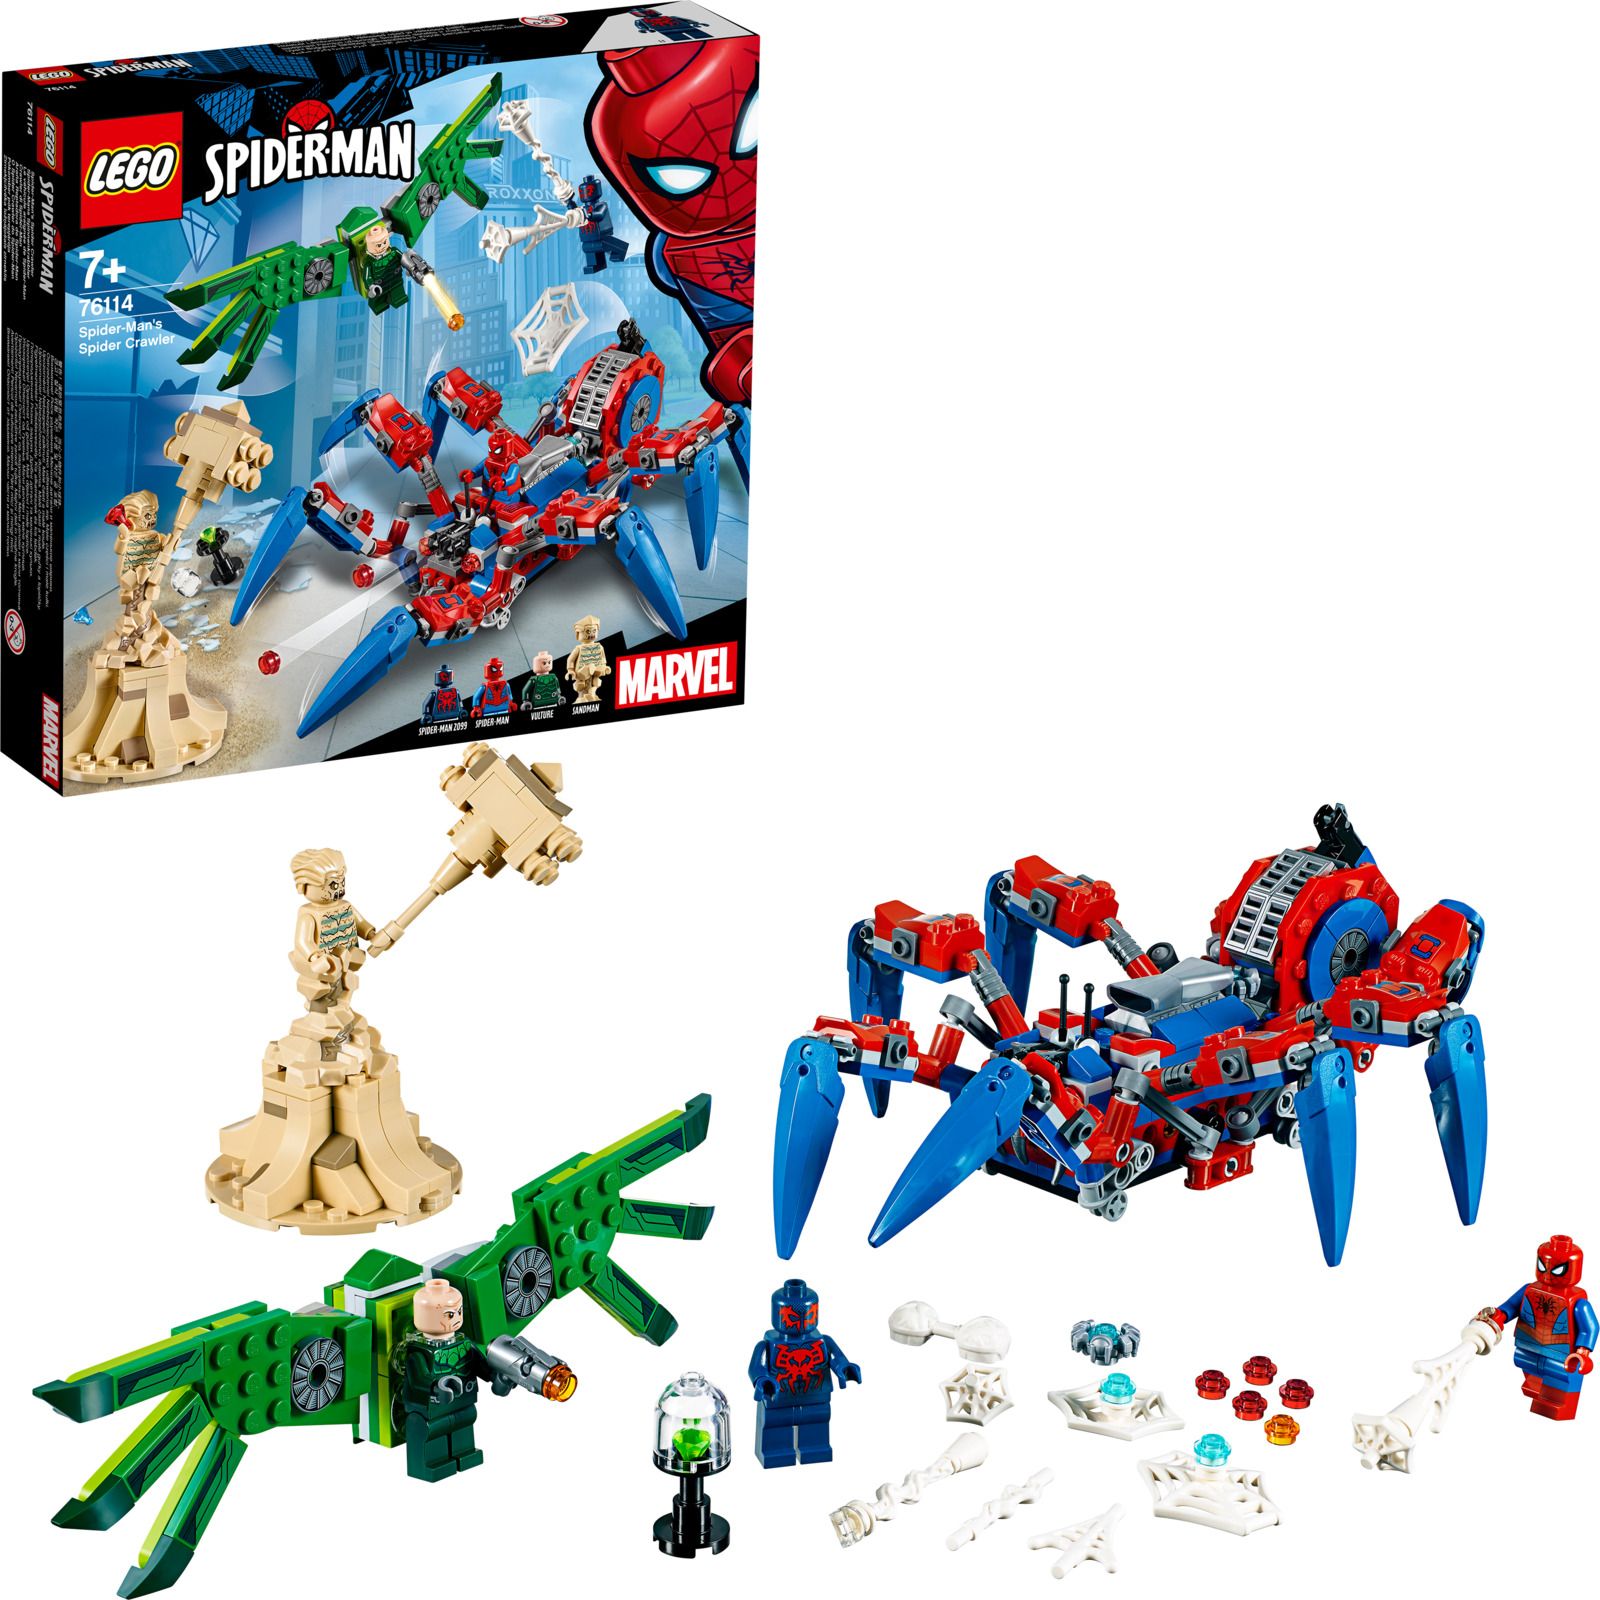 LEGO Super Heroes Marvel 76114   